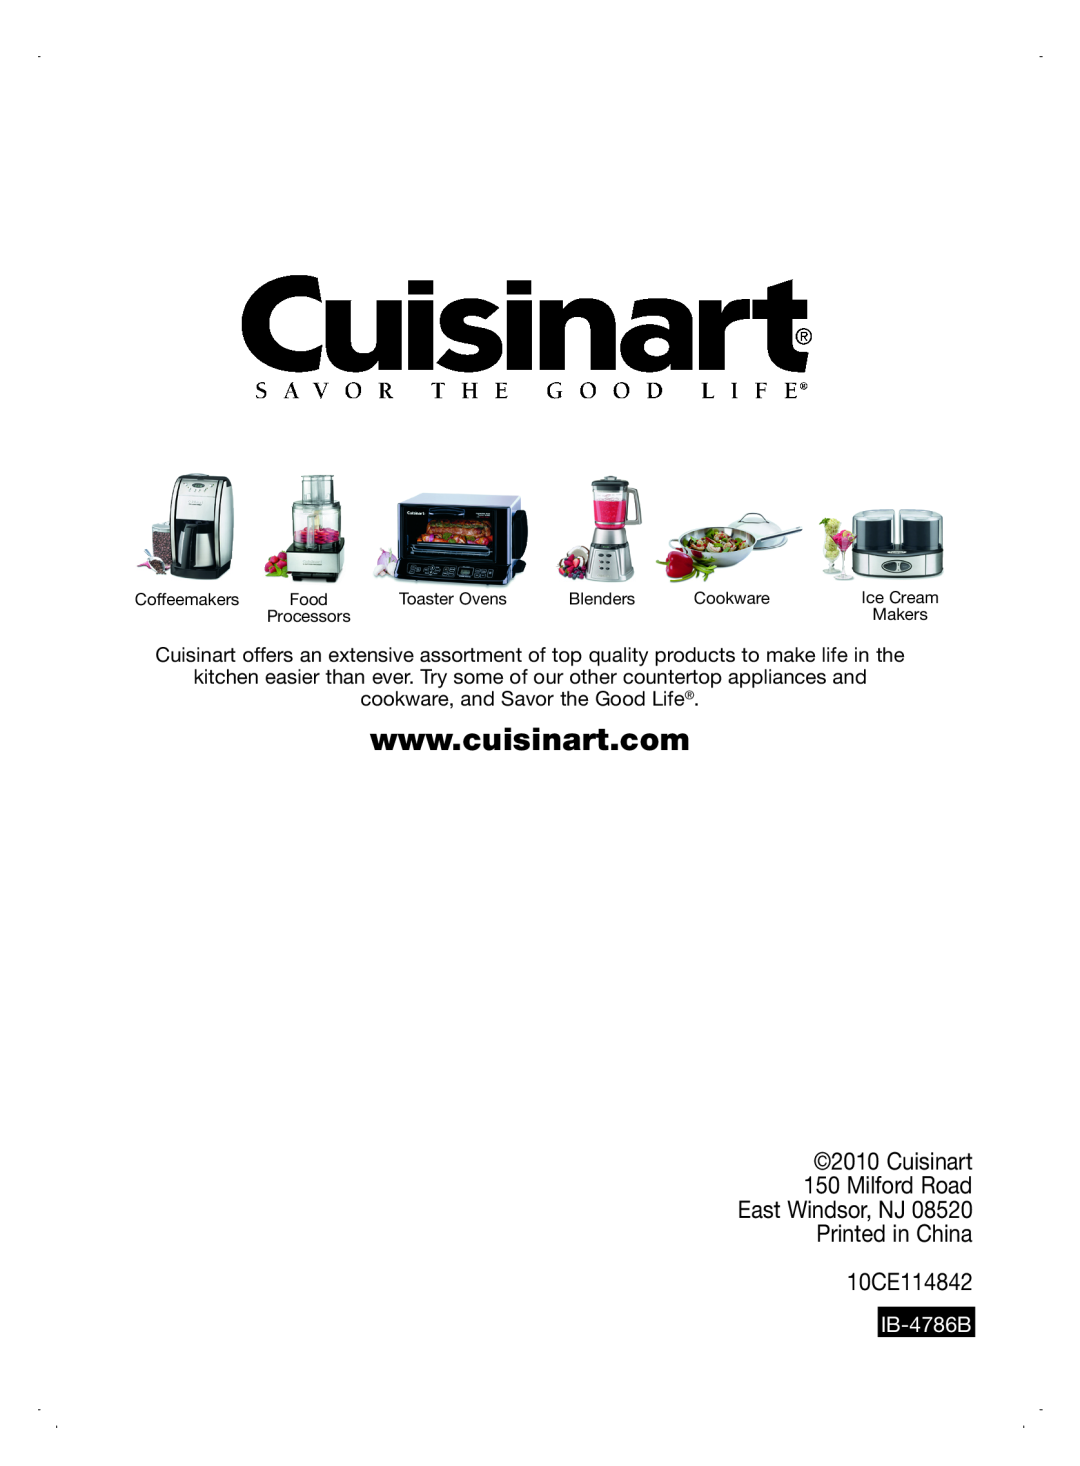 Cuisinart CEC-7 manual Cuisinart 150 Milford Road East Windsor, NJ Printed in China, 10CE114842, IB-4786B 